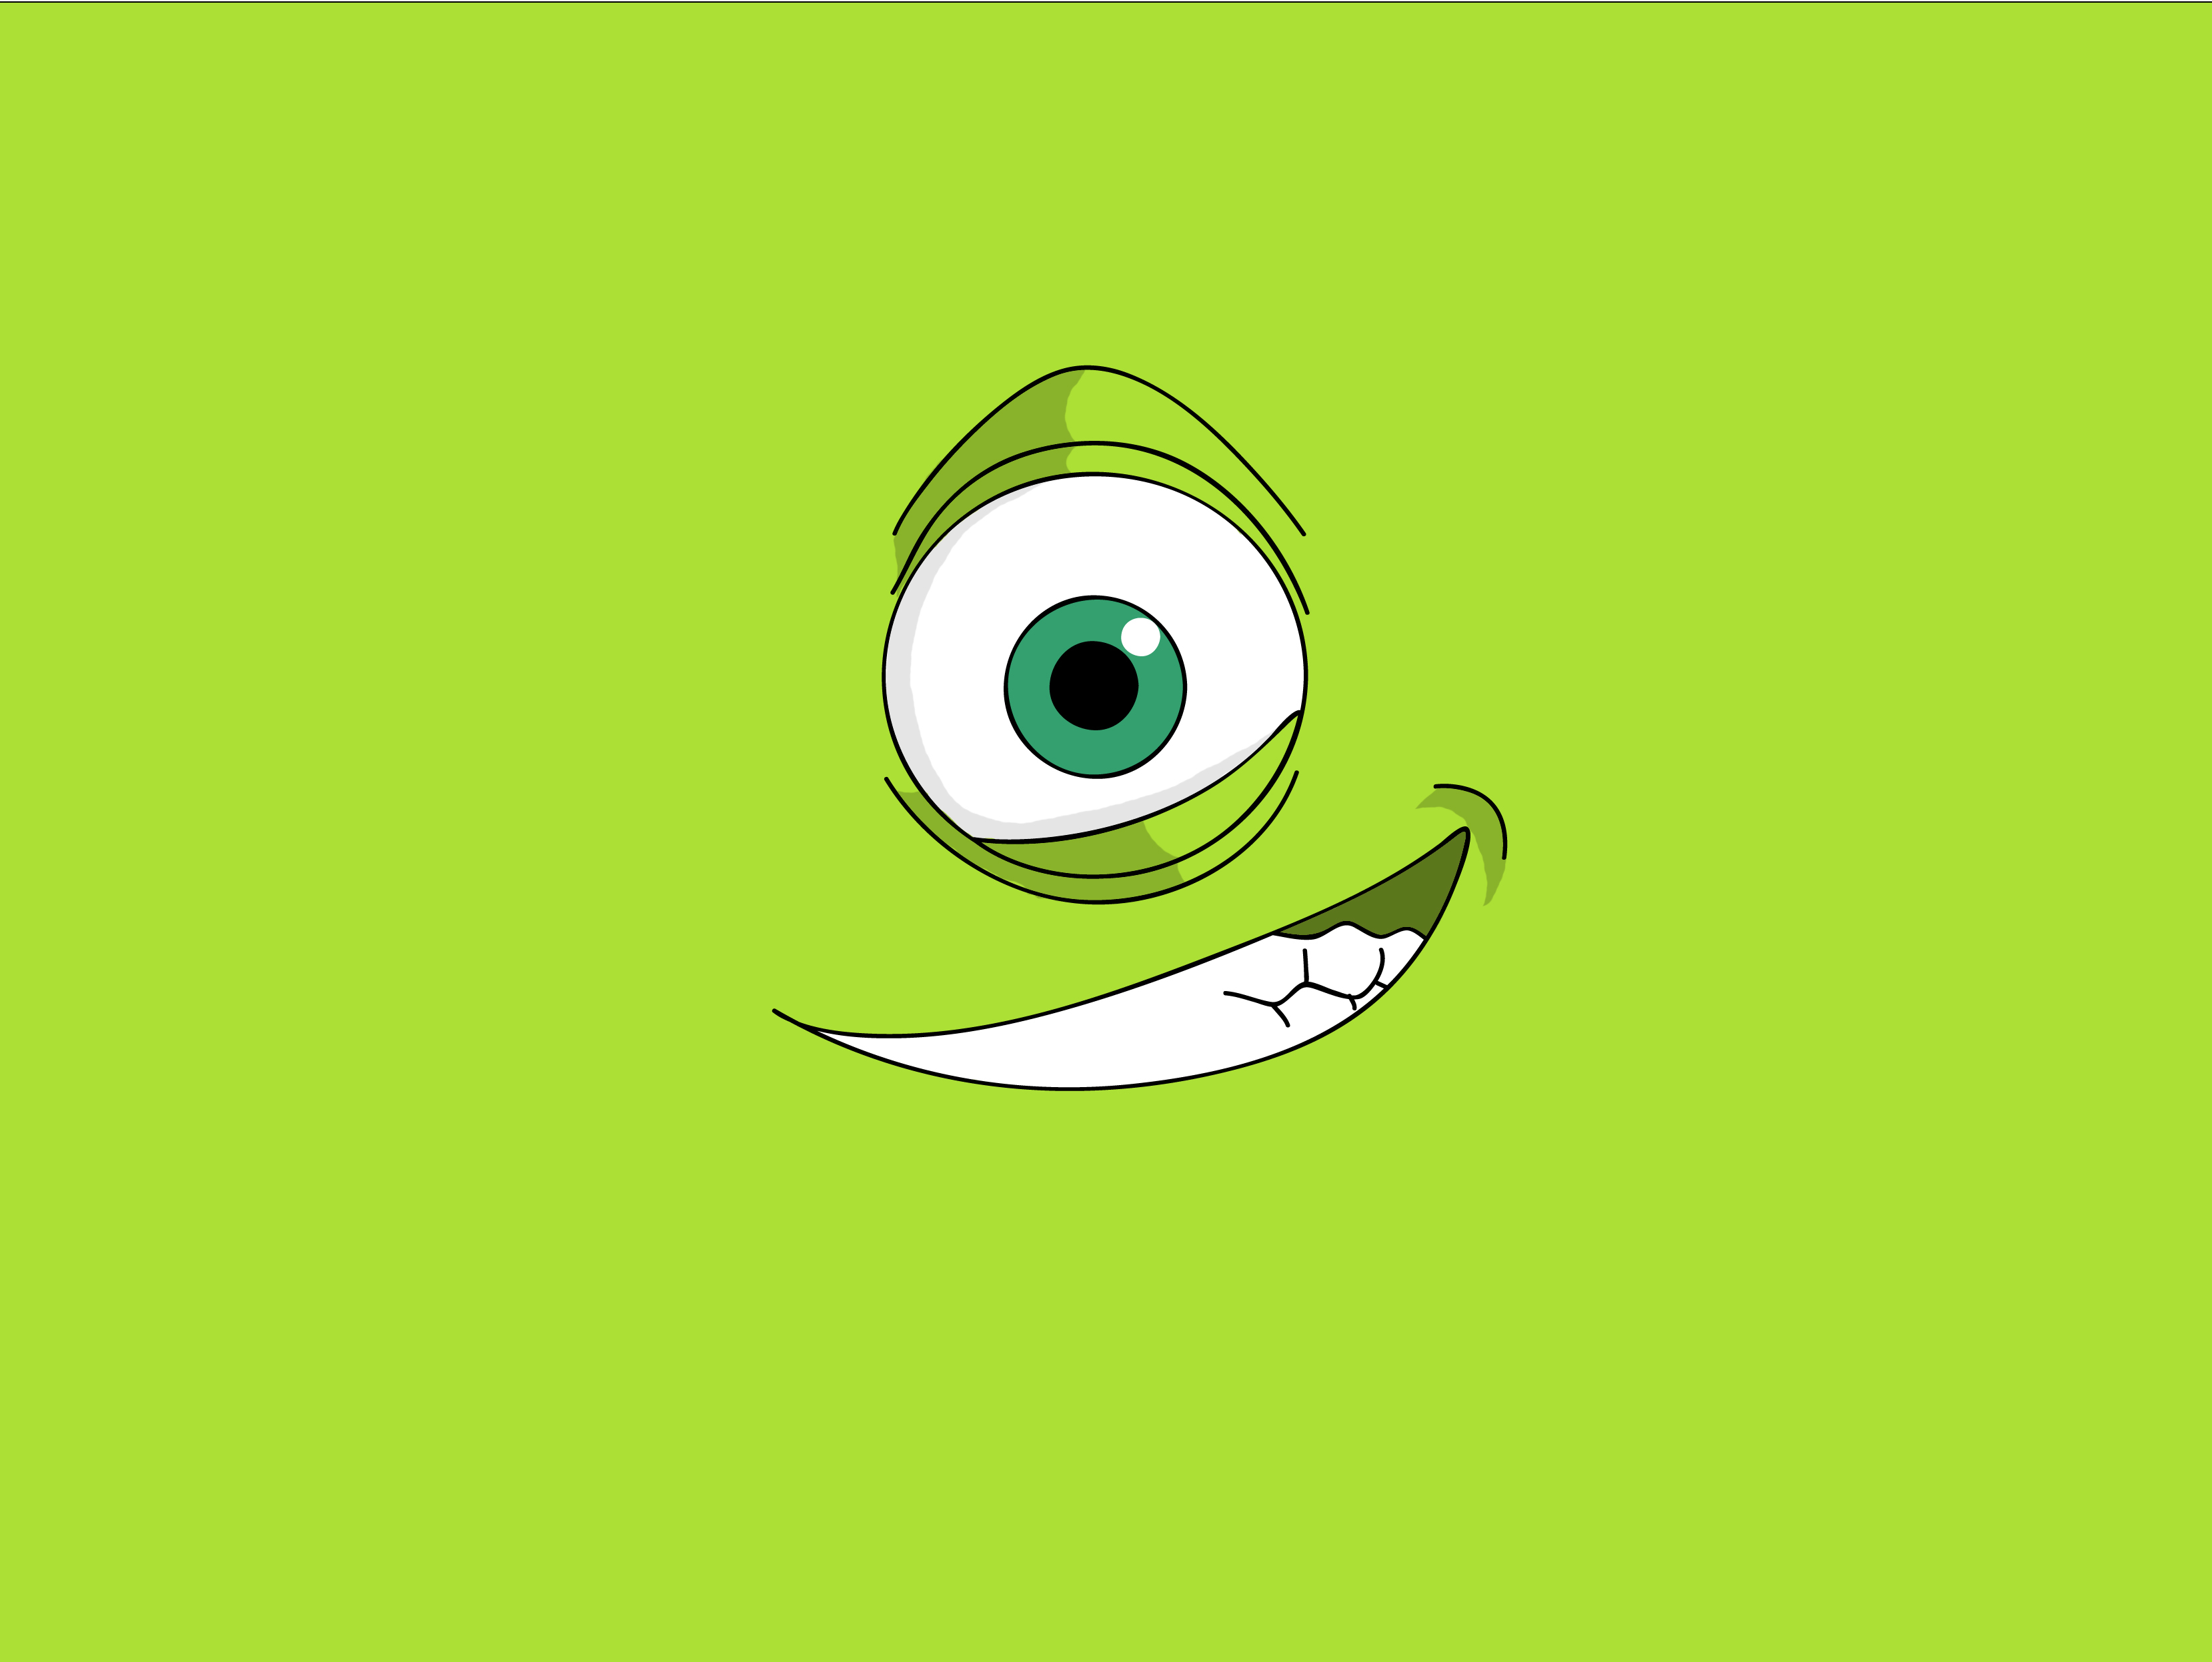 monster inc fondos de pantalla hd,verde,dibujos animados,ojo,sonrisa,ilustración